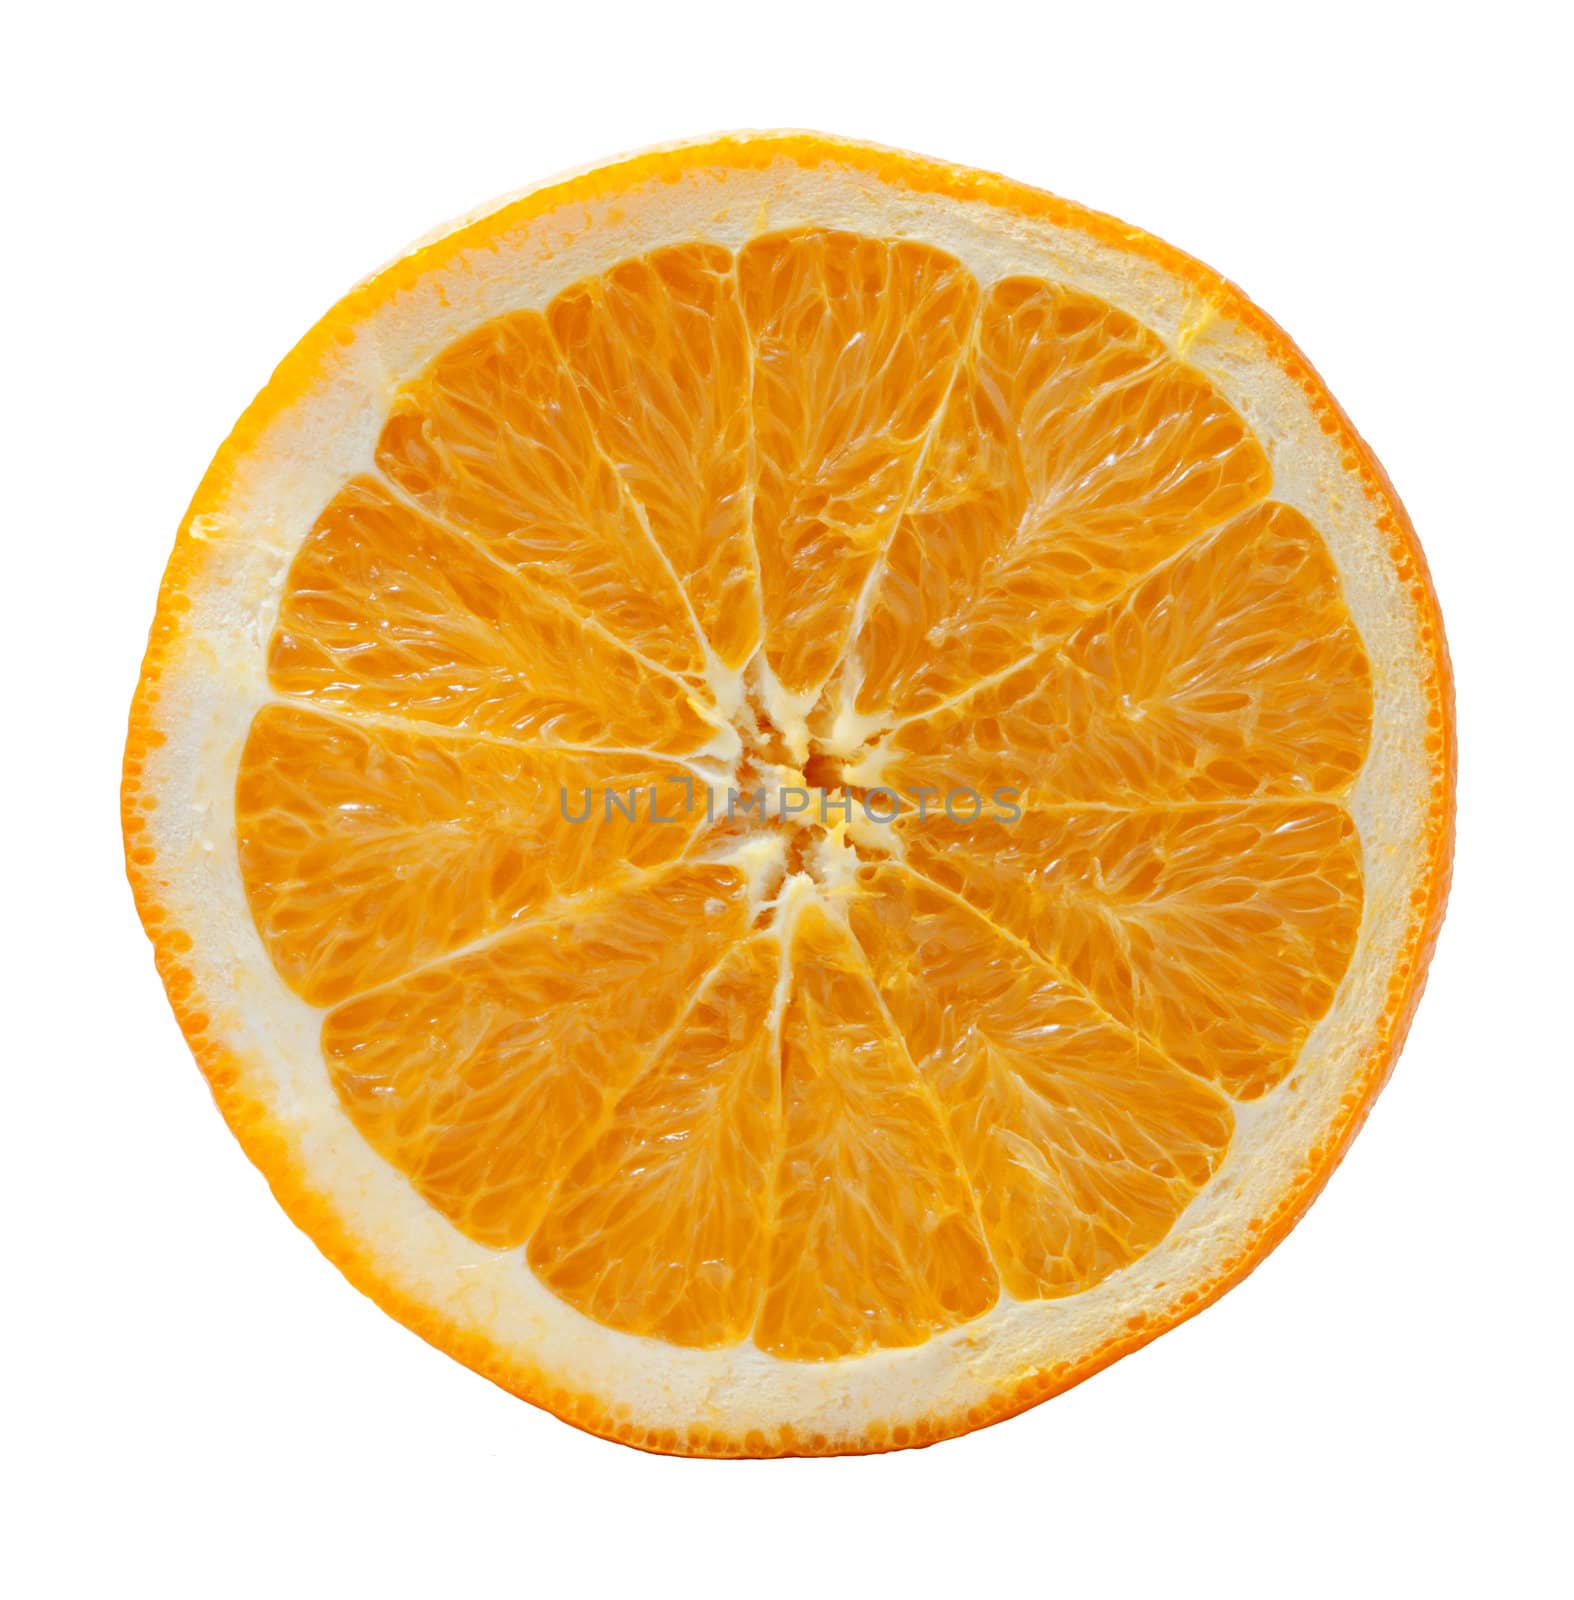 Slice of orange by nigerfoxy